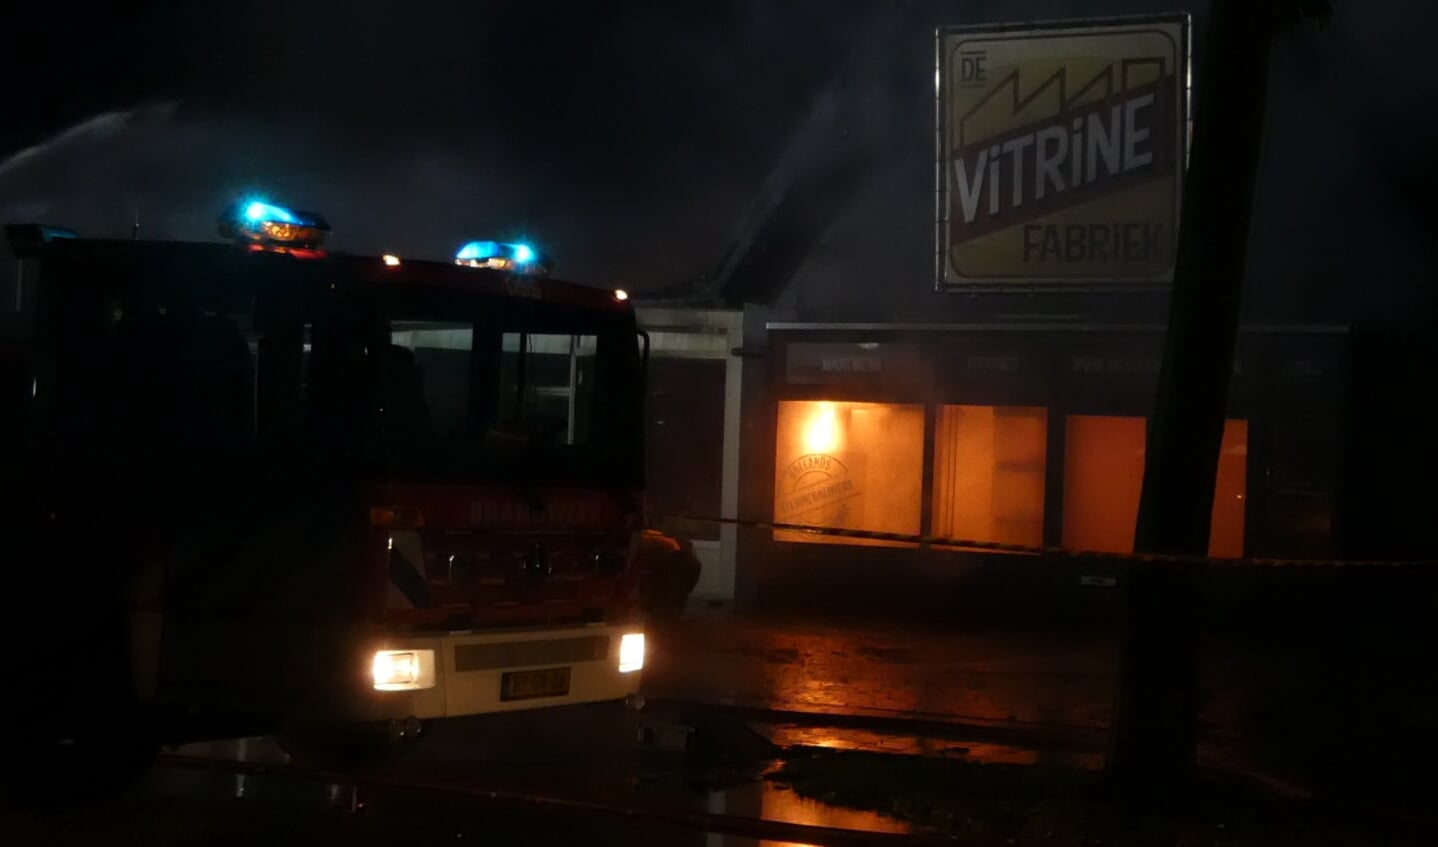 Brand verwoest supermarkt en De Vitrinefabriek in Willibrordusweg. (Foto: Thomas)